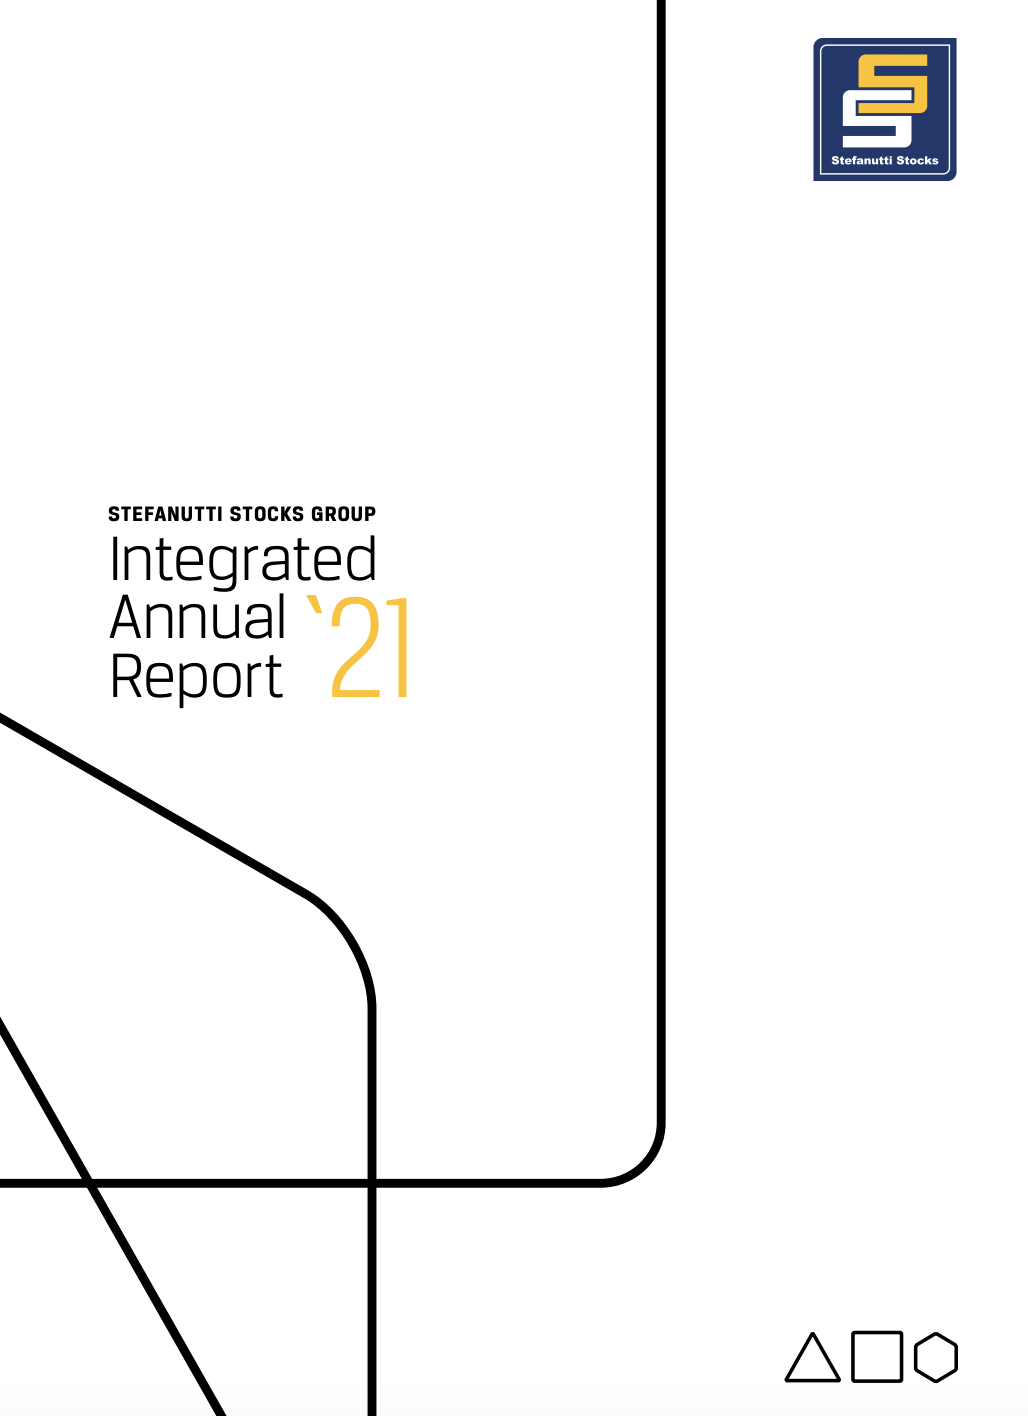 stefanutti-stocks-annual-integrated-report-2021